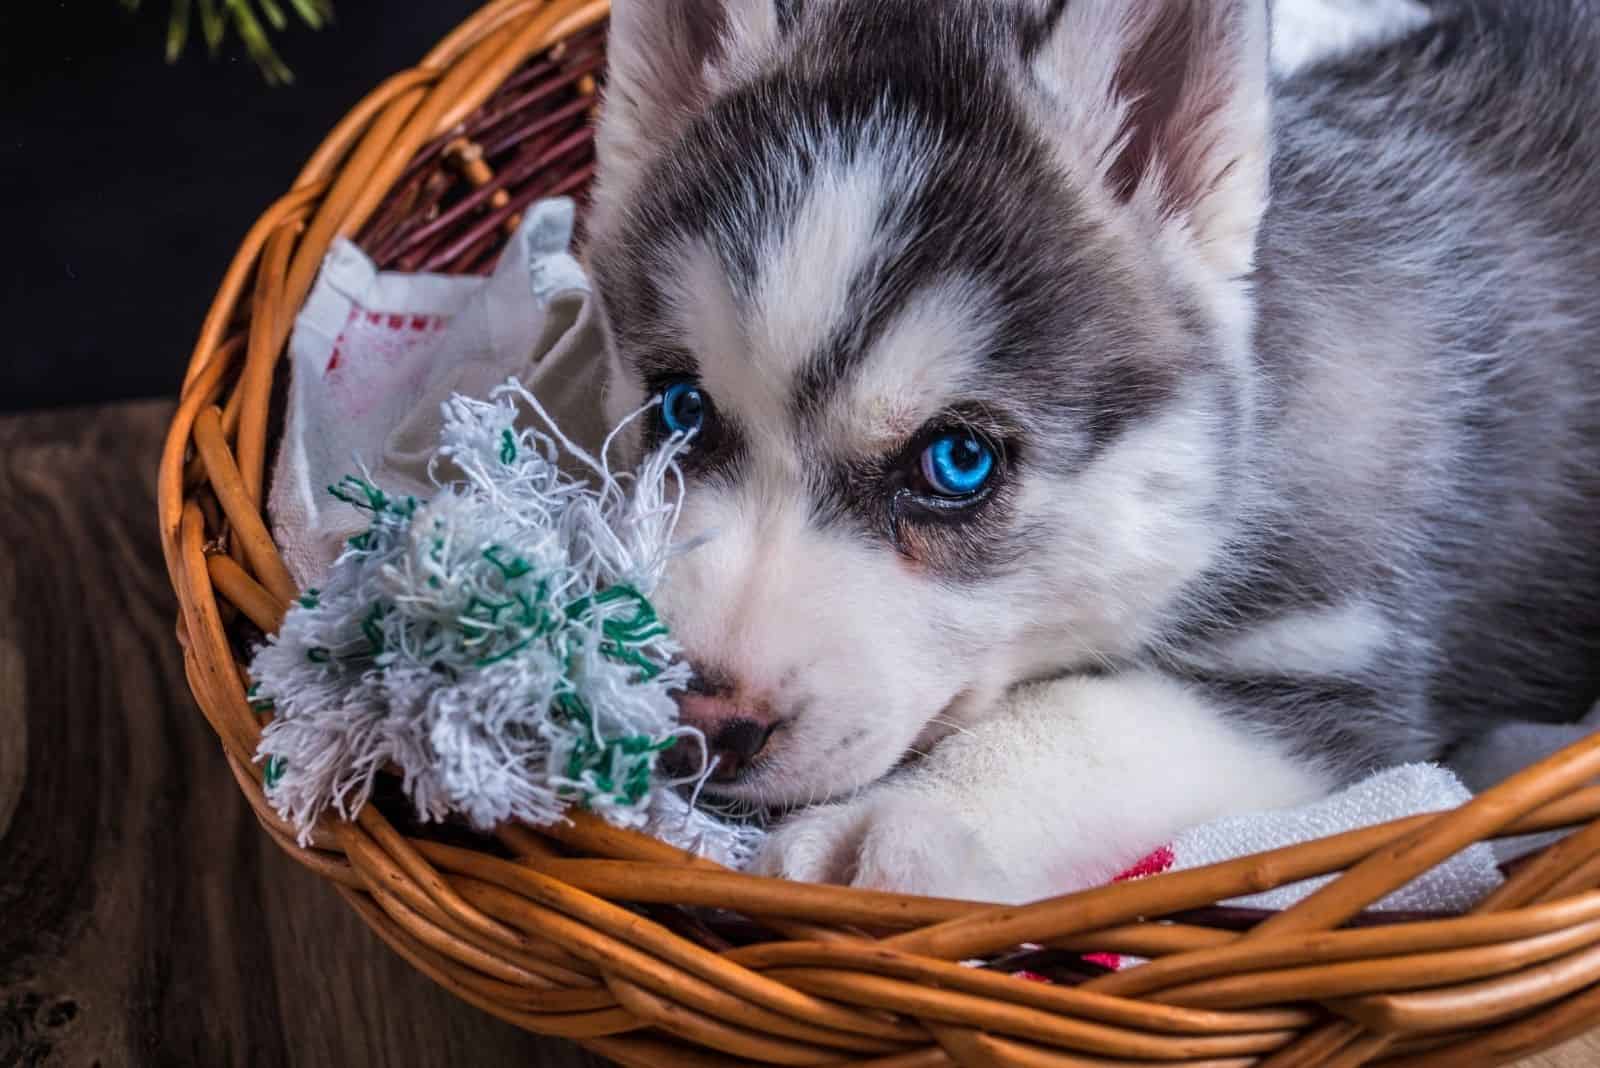 small husky lying down inside the basket